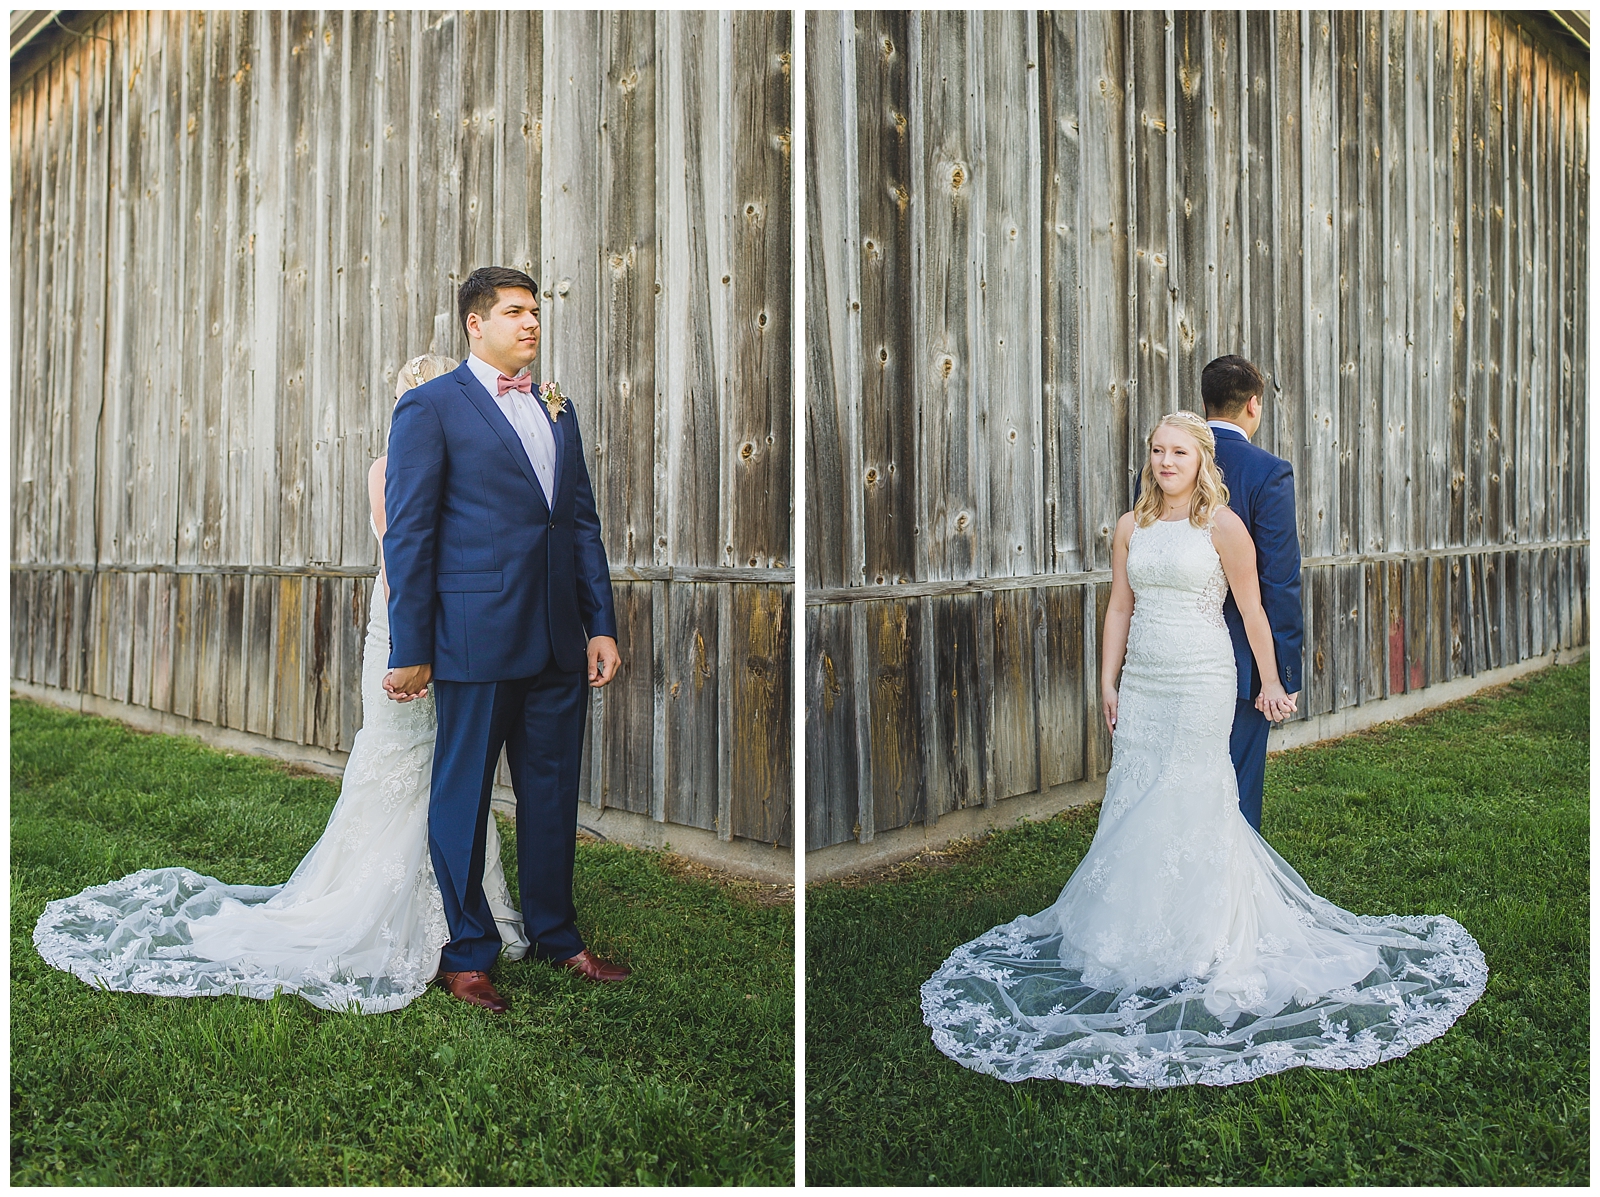 Wedding photography at Backwoods Venue 222 in Gower, Missouri, by Kansas City wedding photographers Wisdom-Watson Weddings.